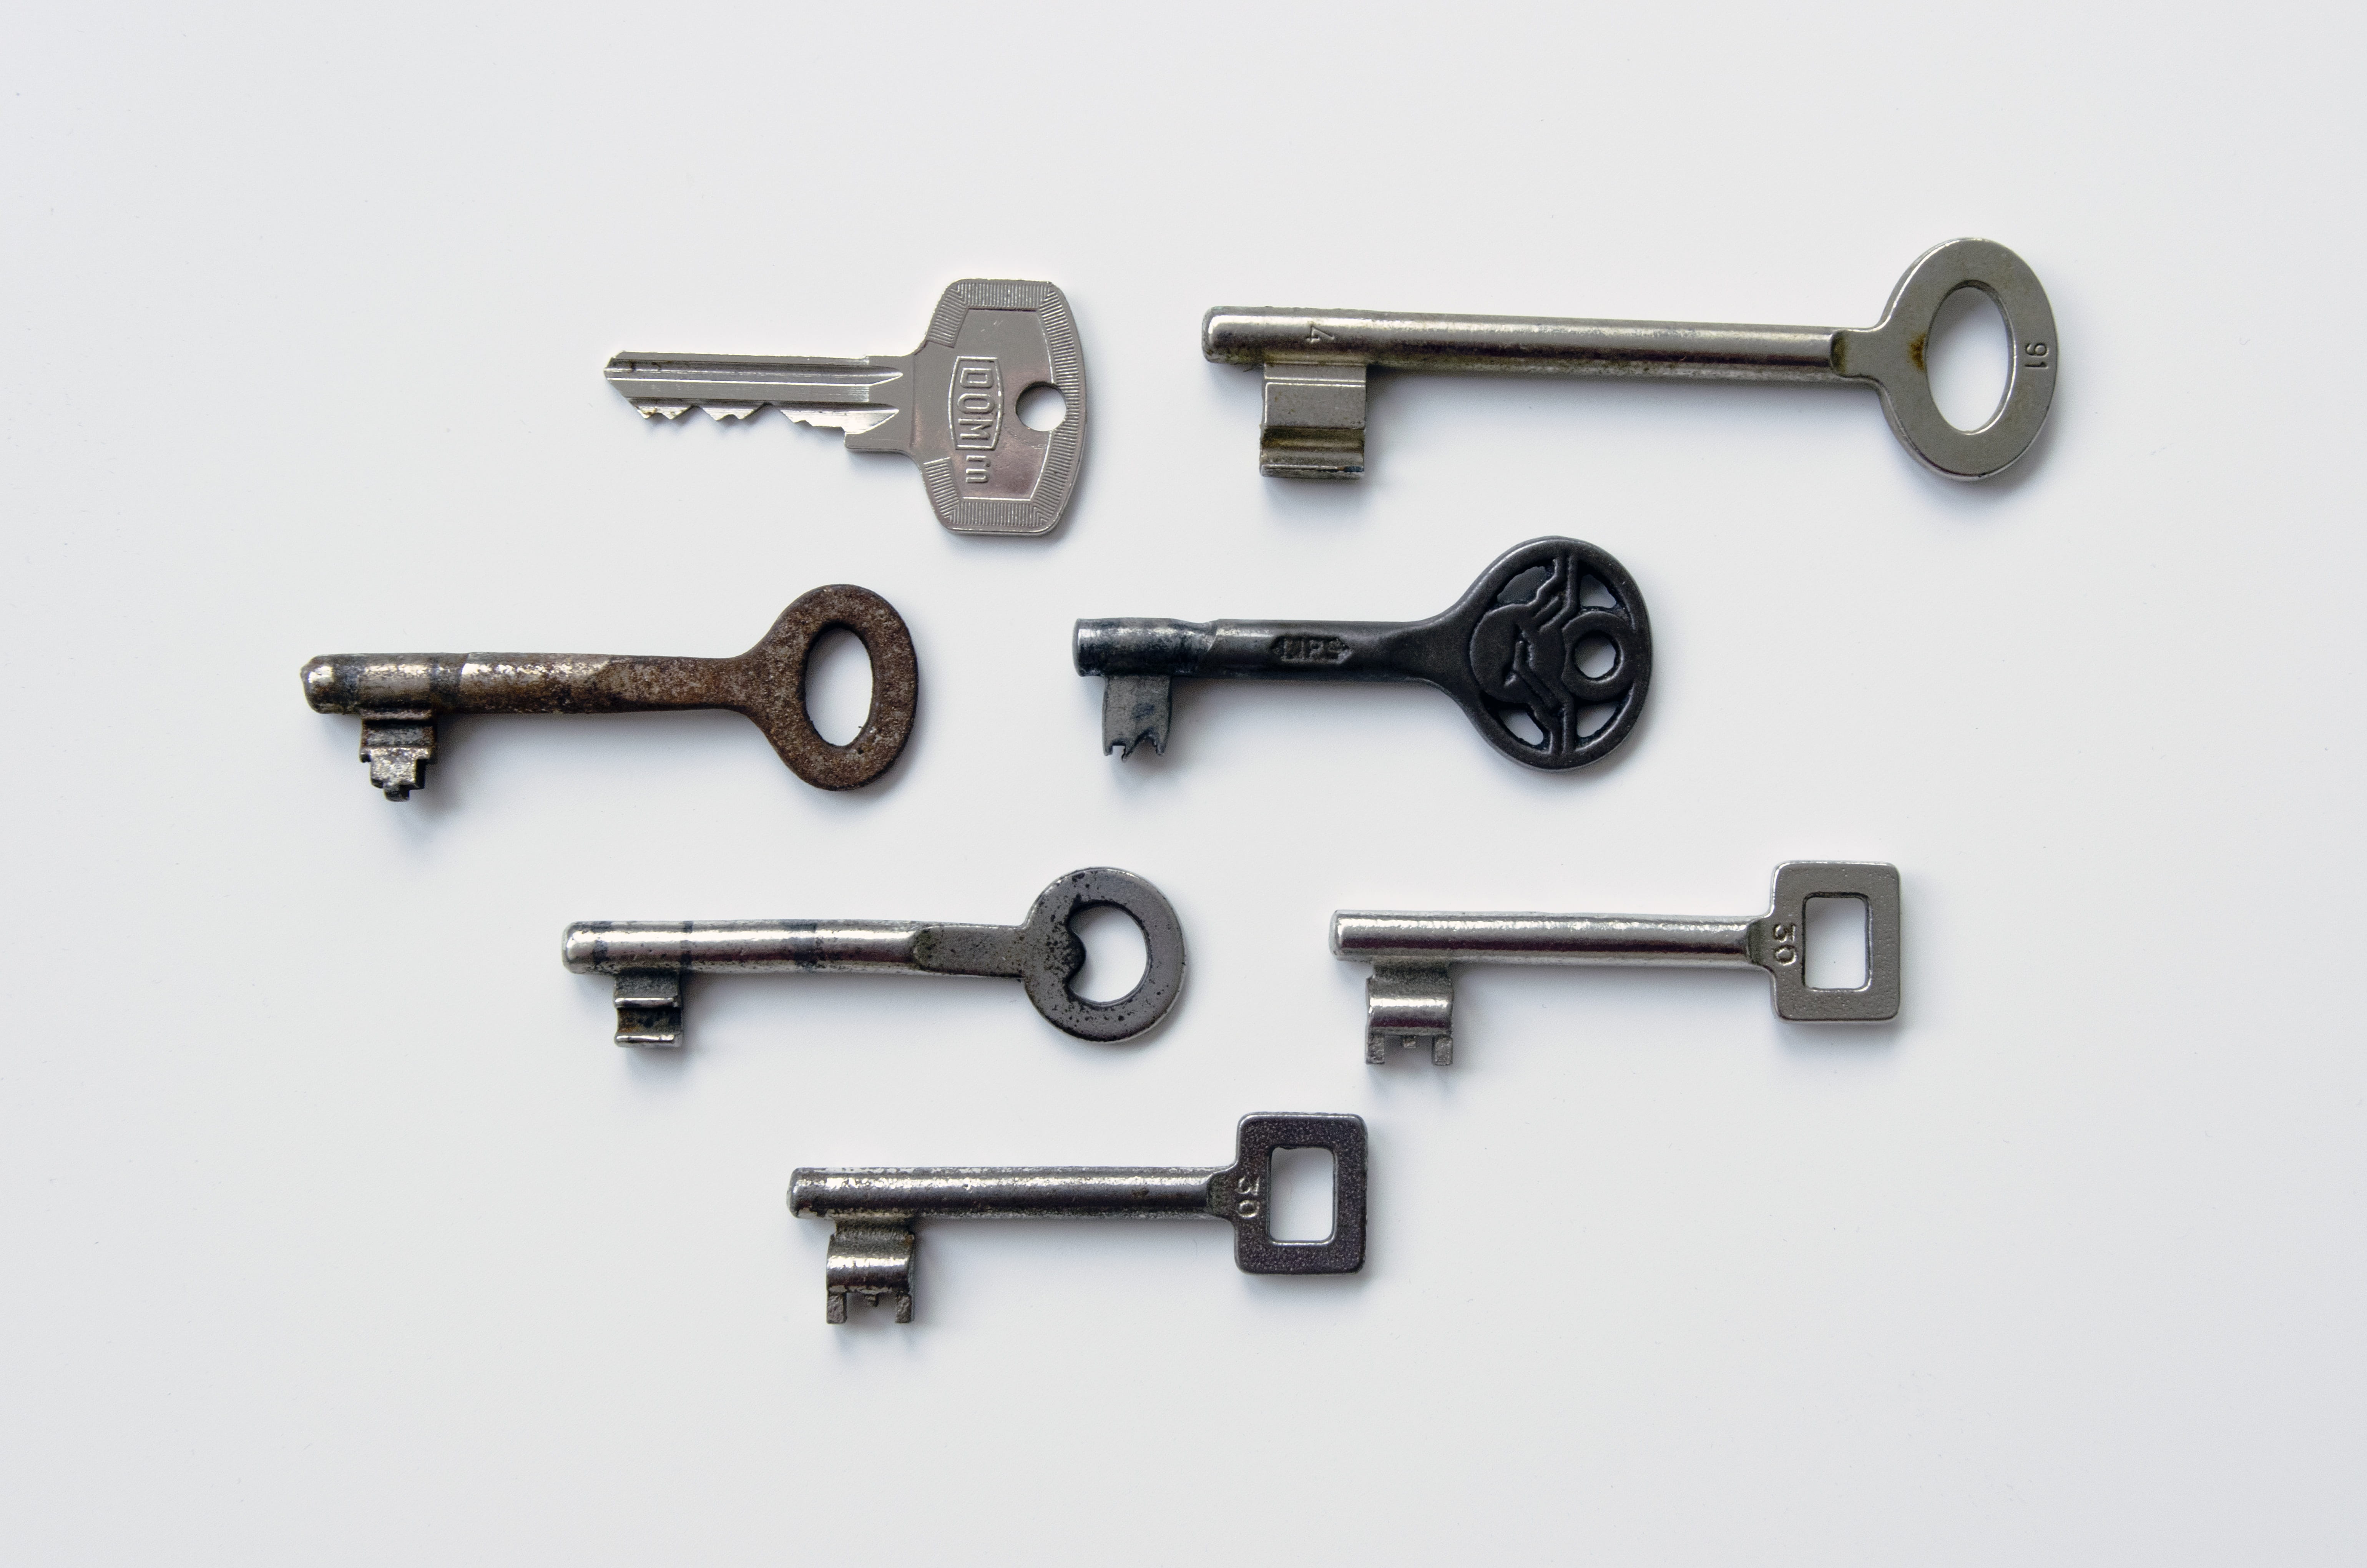 keys, metal, security, lock, safety, secure, old, secret, steel